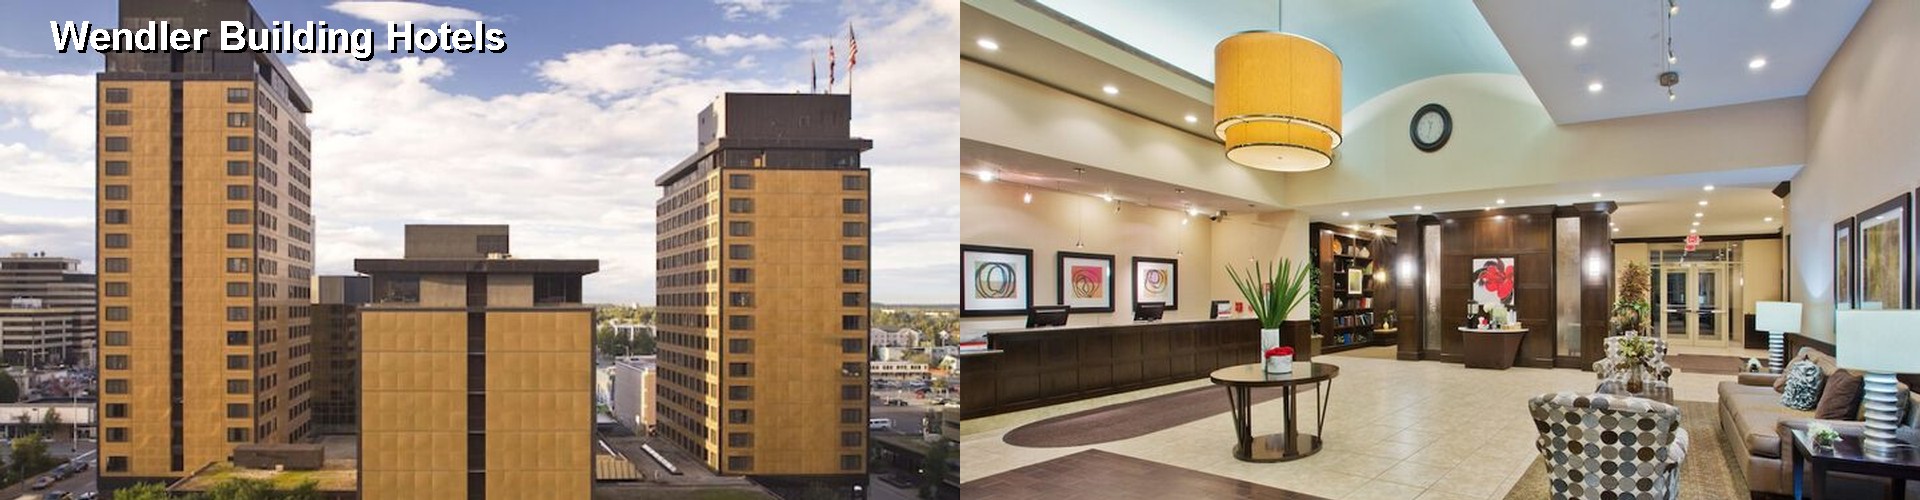 4 Best Hotels near Wendler Building